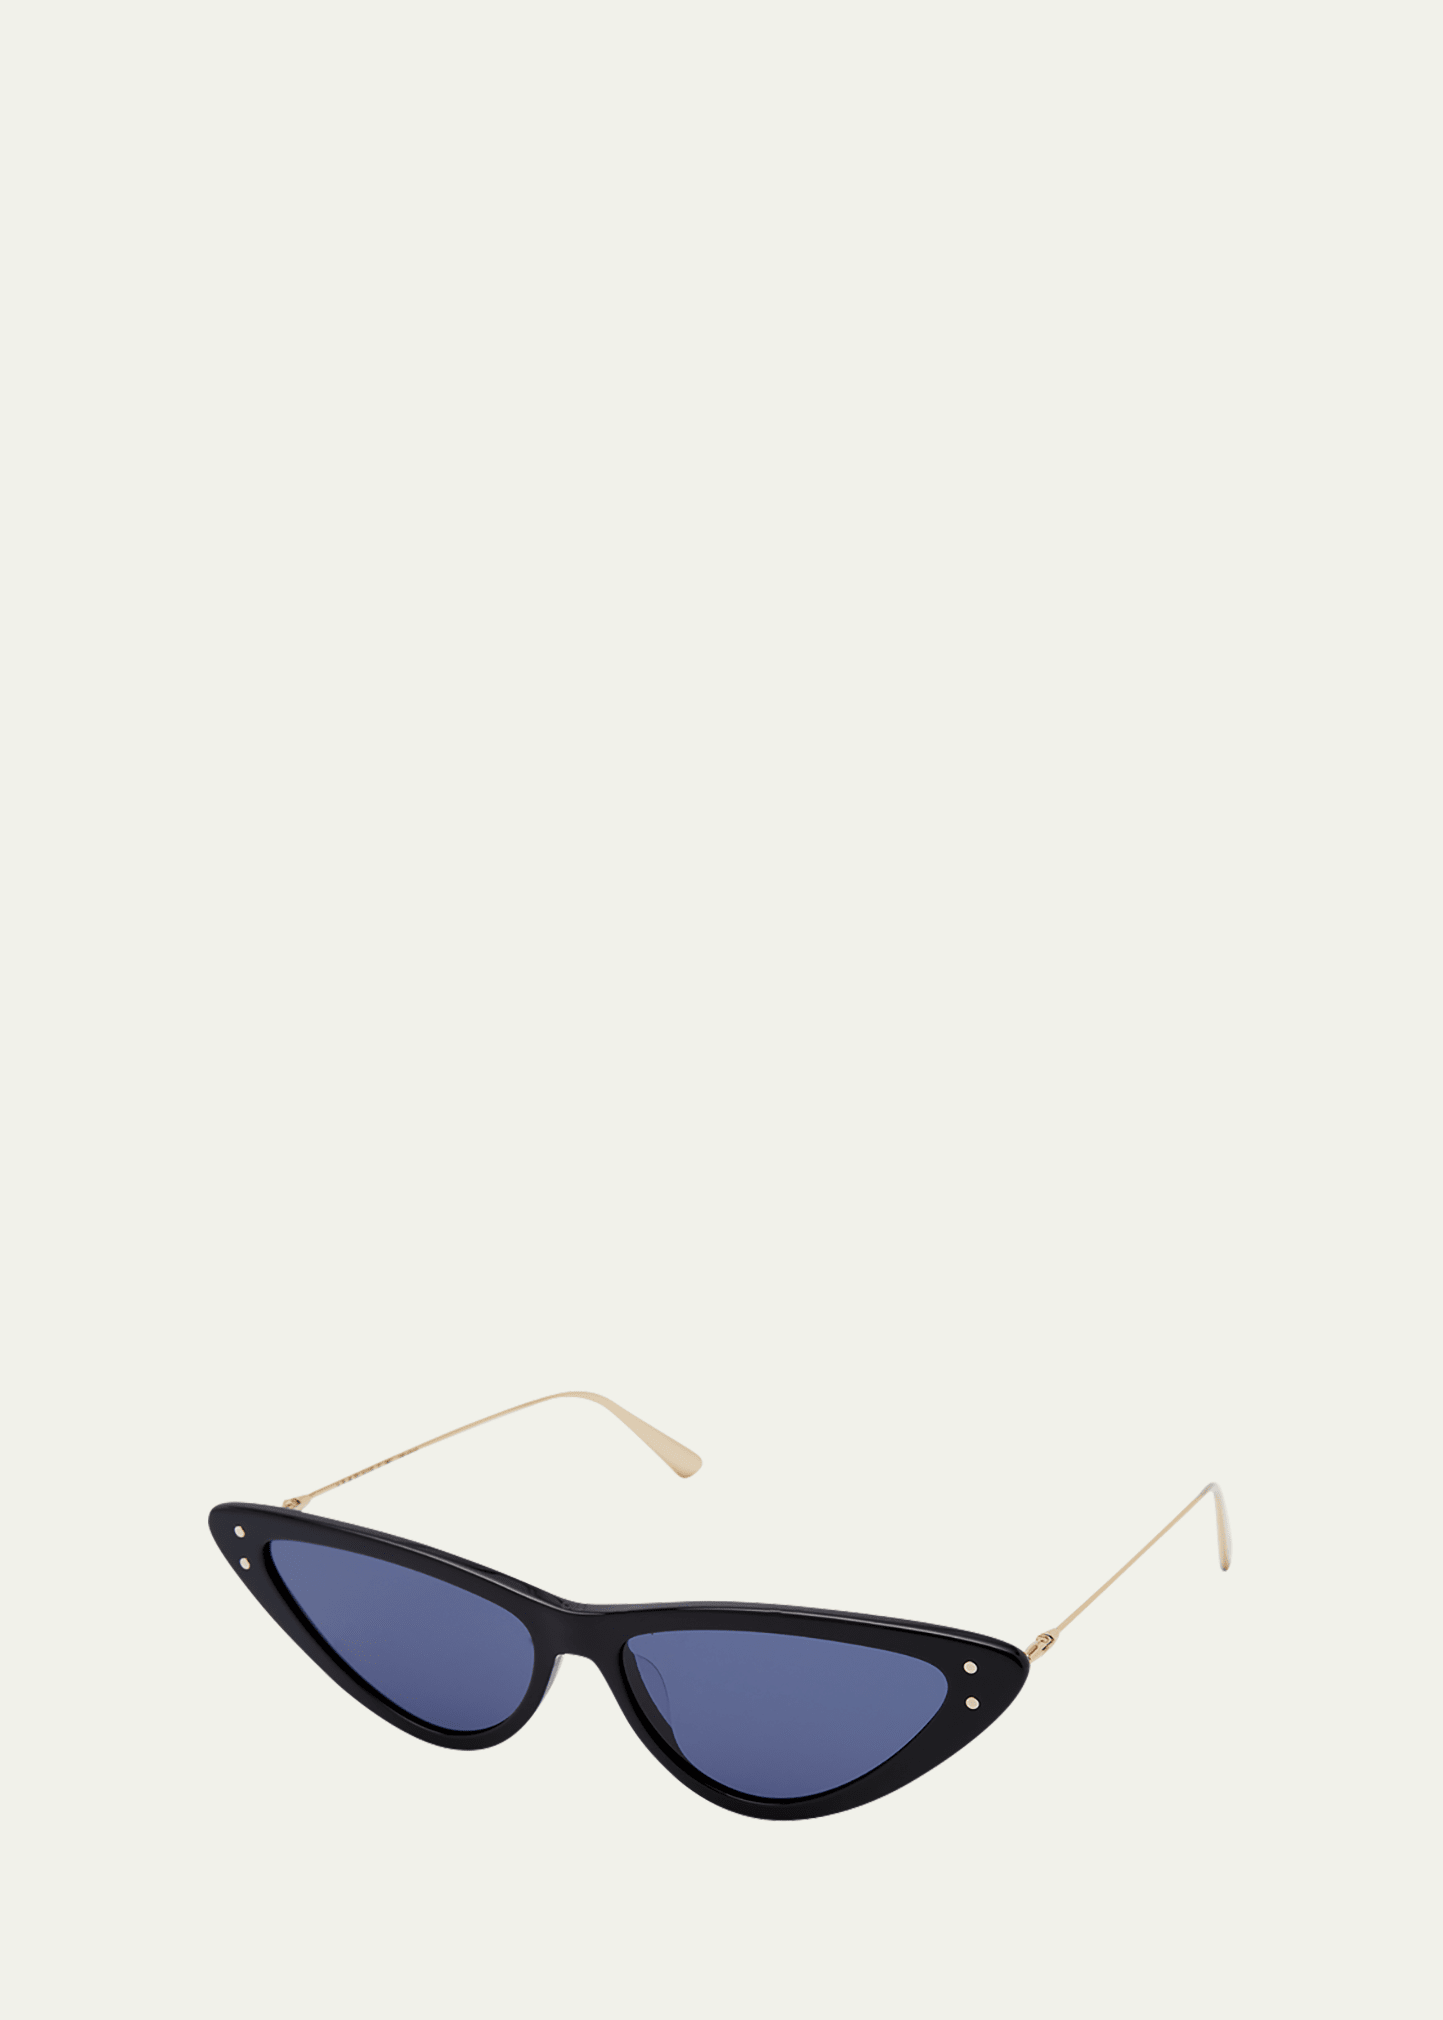 MissDior B4U Acetate & Metal Cat-Eye Sunglasses